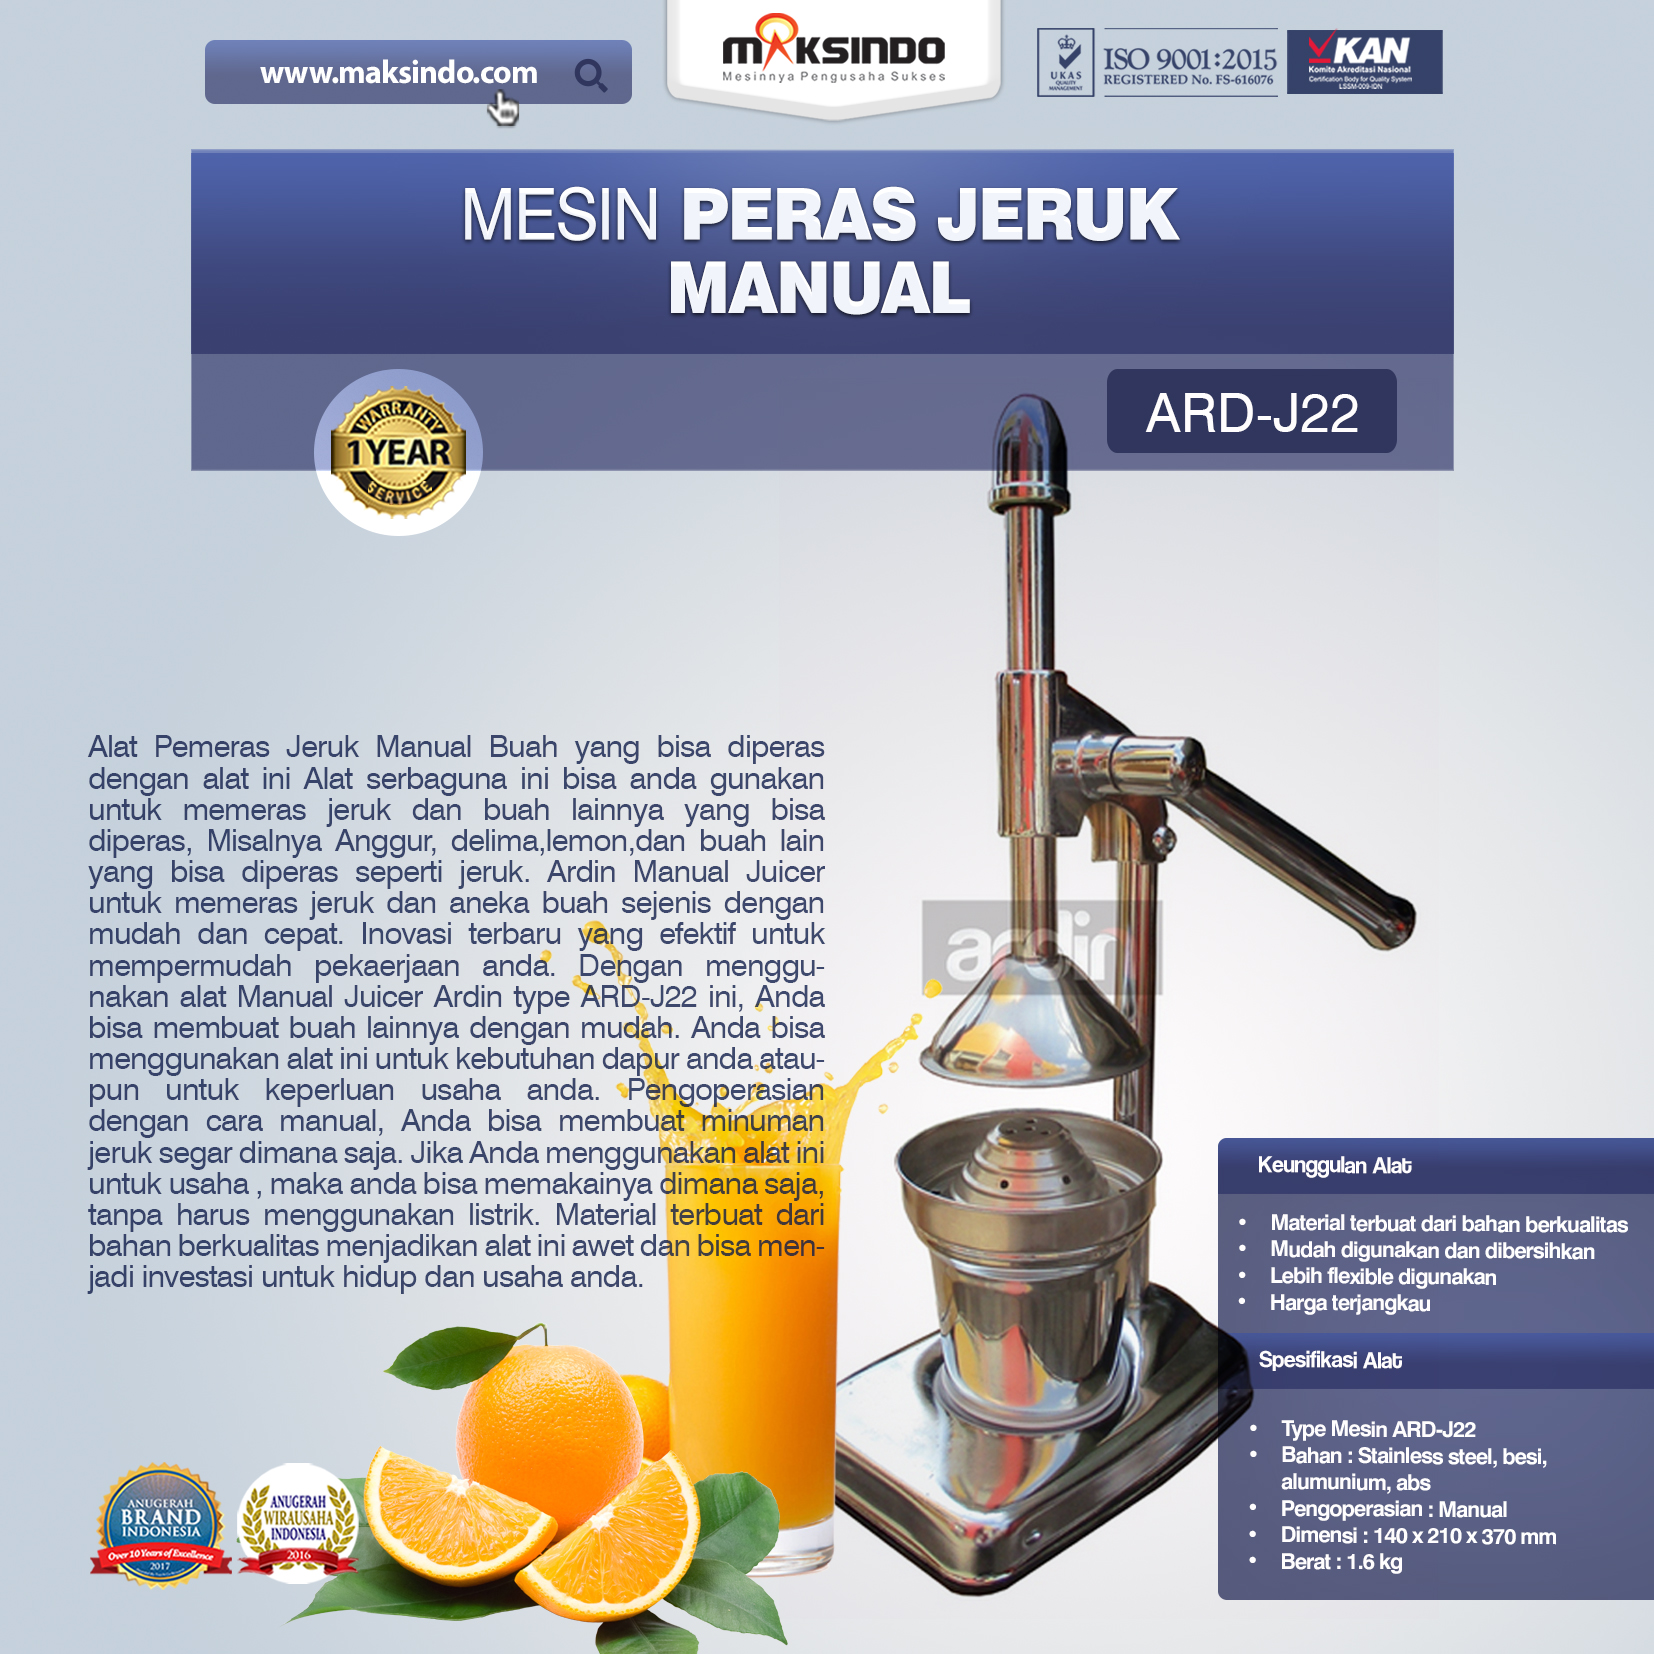 Jual Alat Pemeras Jeruk Manual ARD-J22 di Blitar